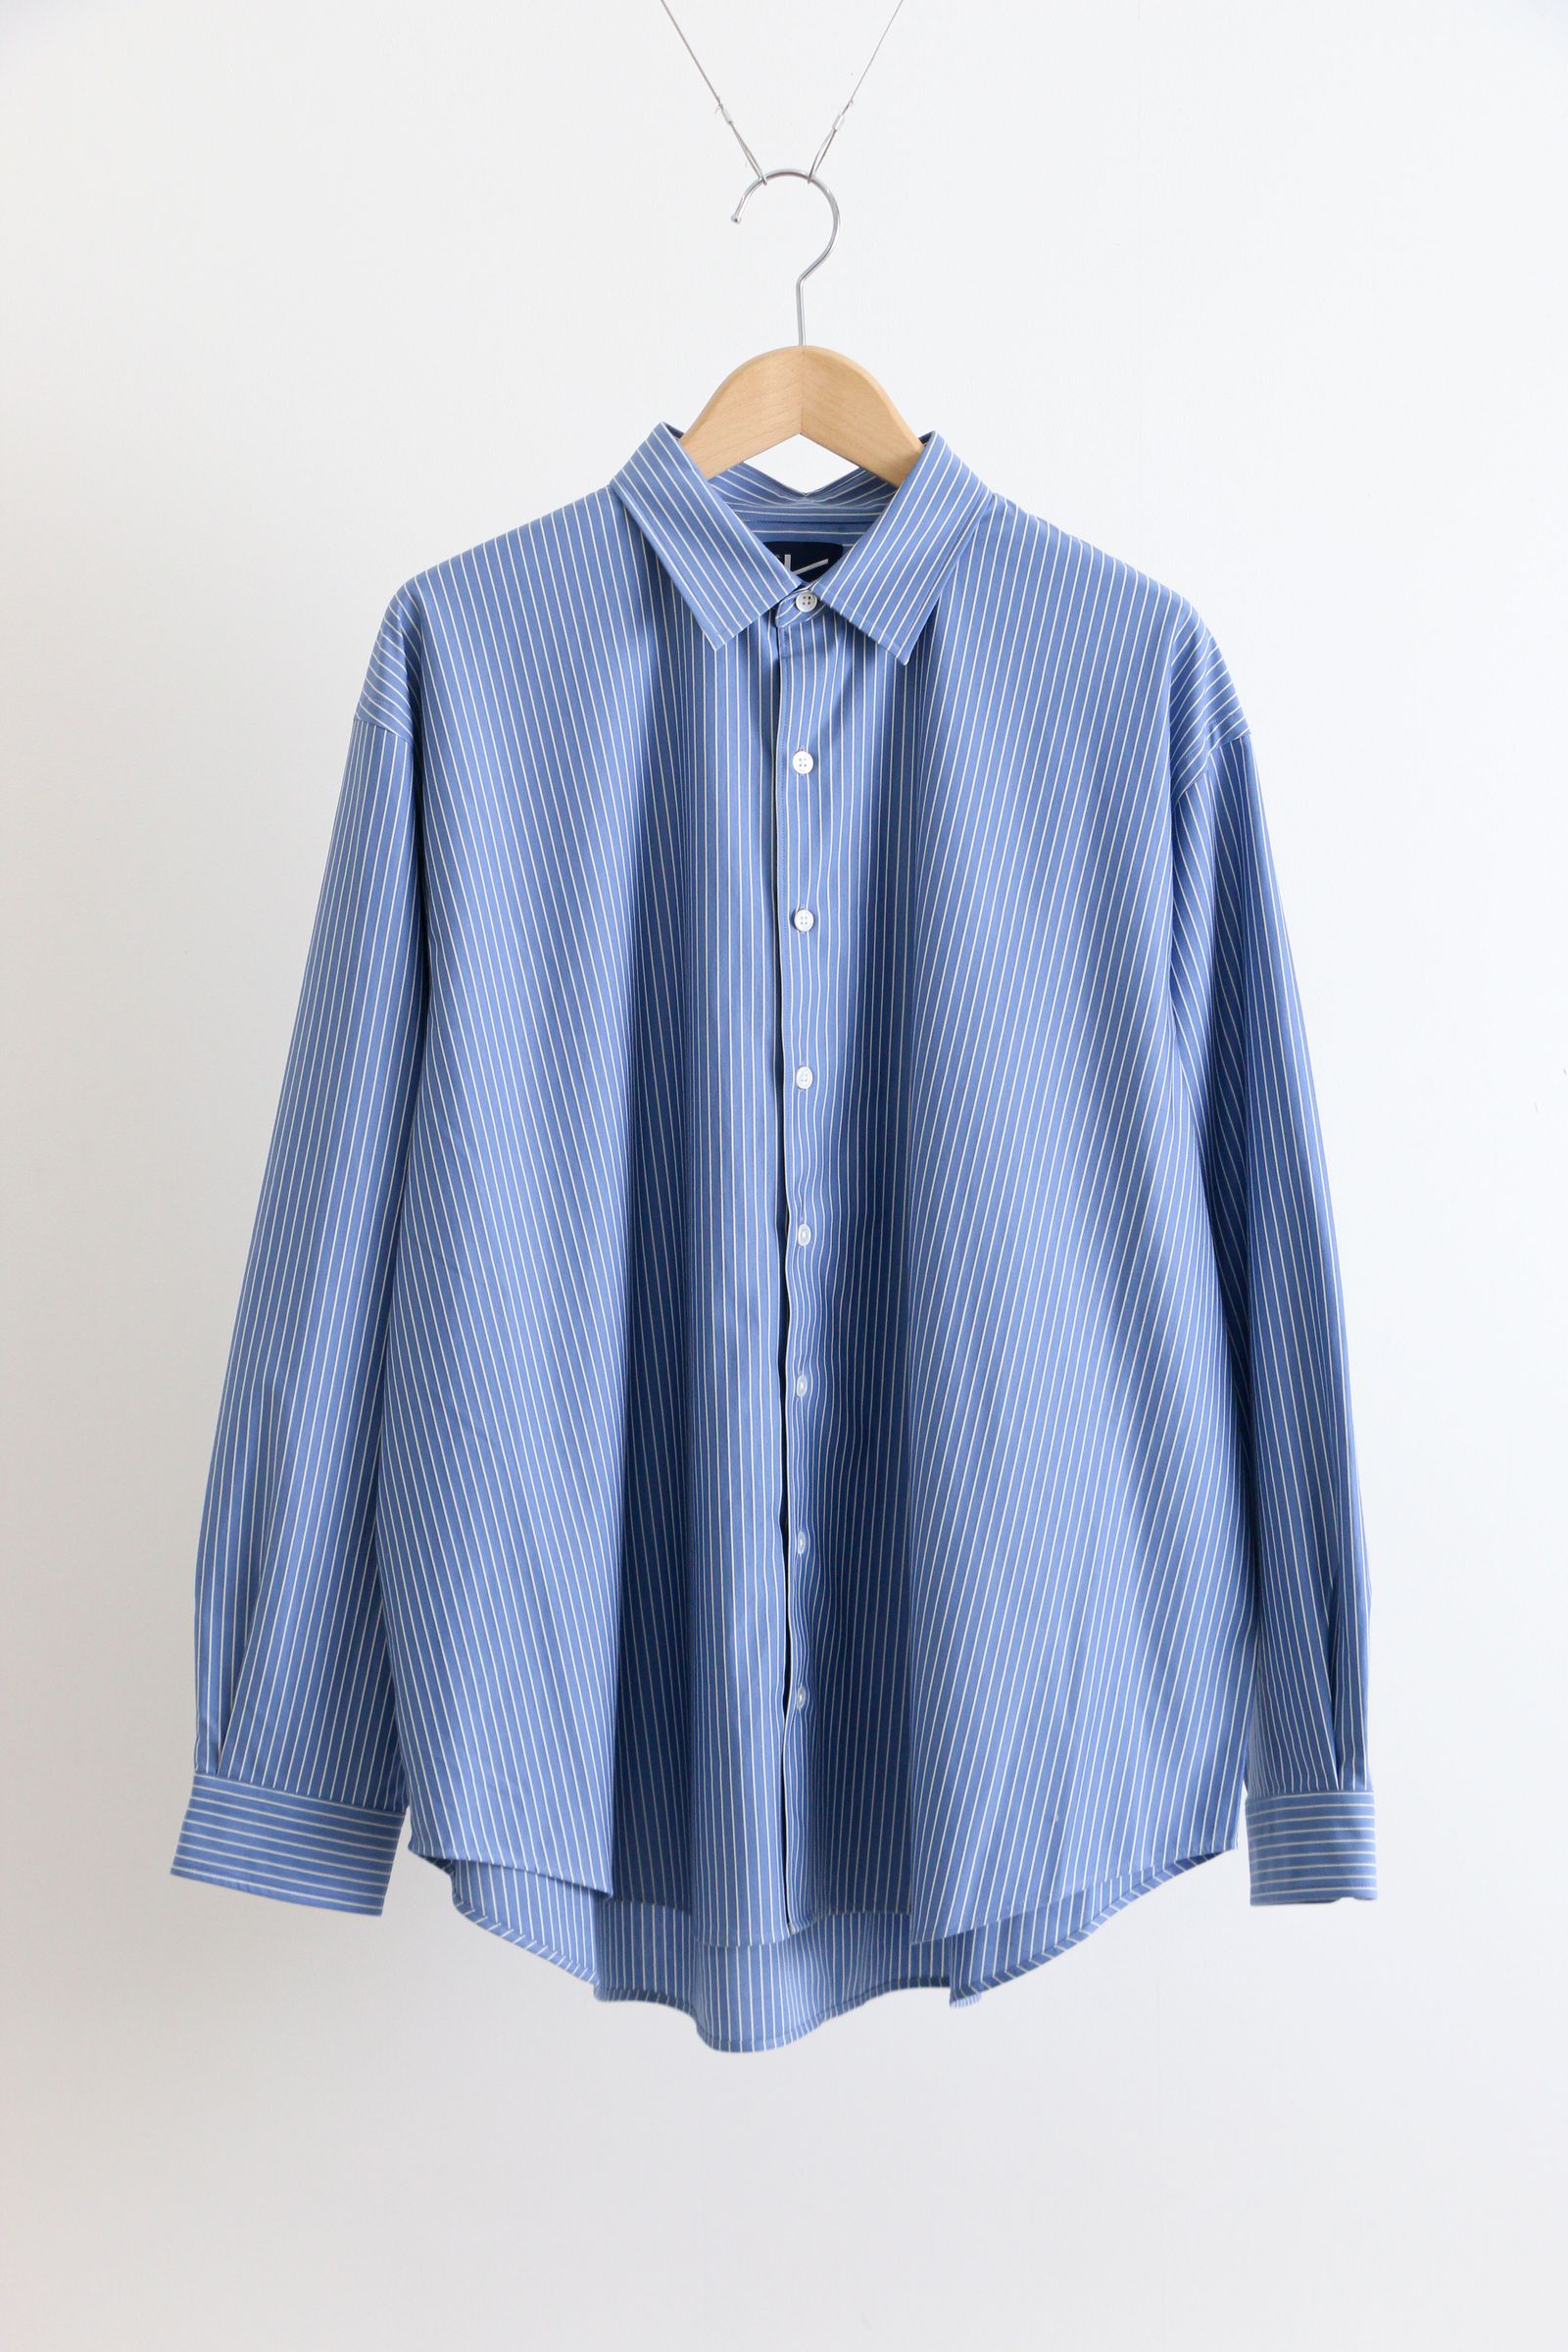 Pencil Stripe Dress Jersey Shirt / BL SP /オーバーサイズ / シャツ / ストライプ - M